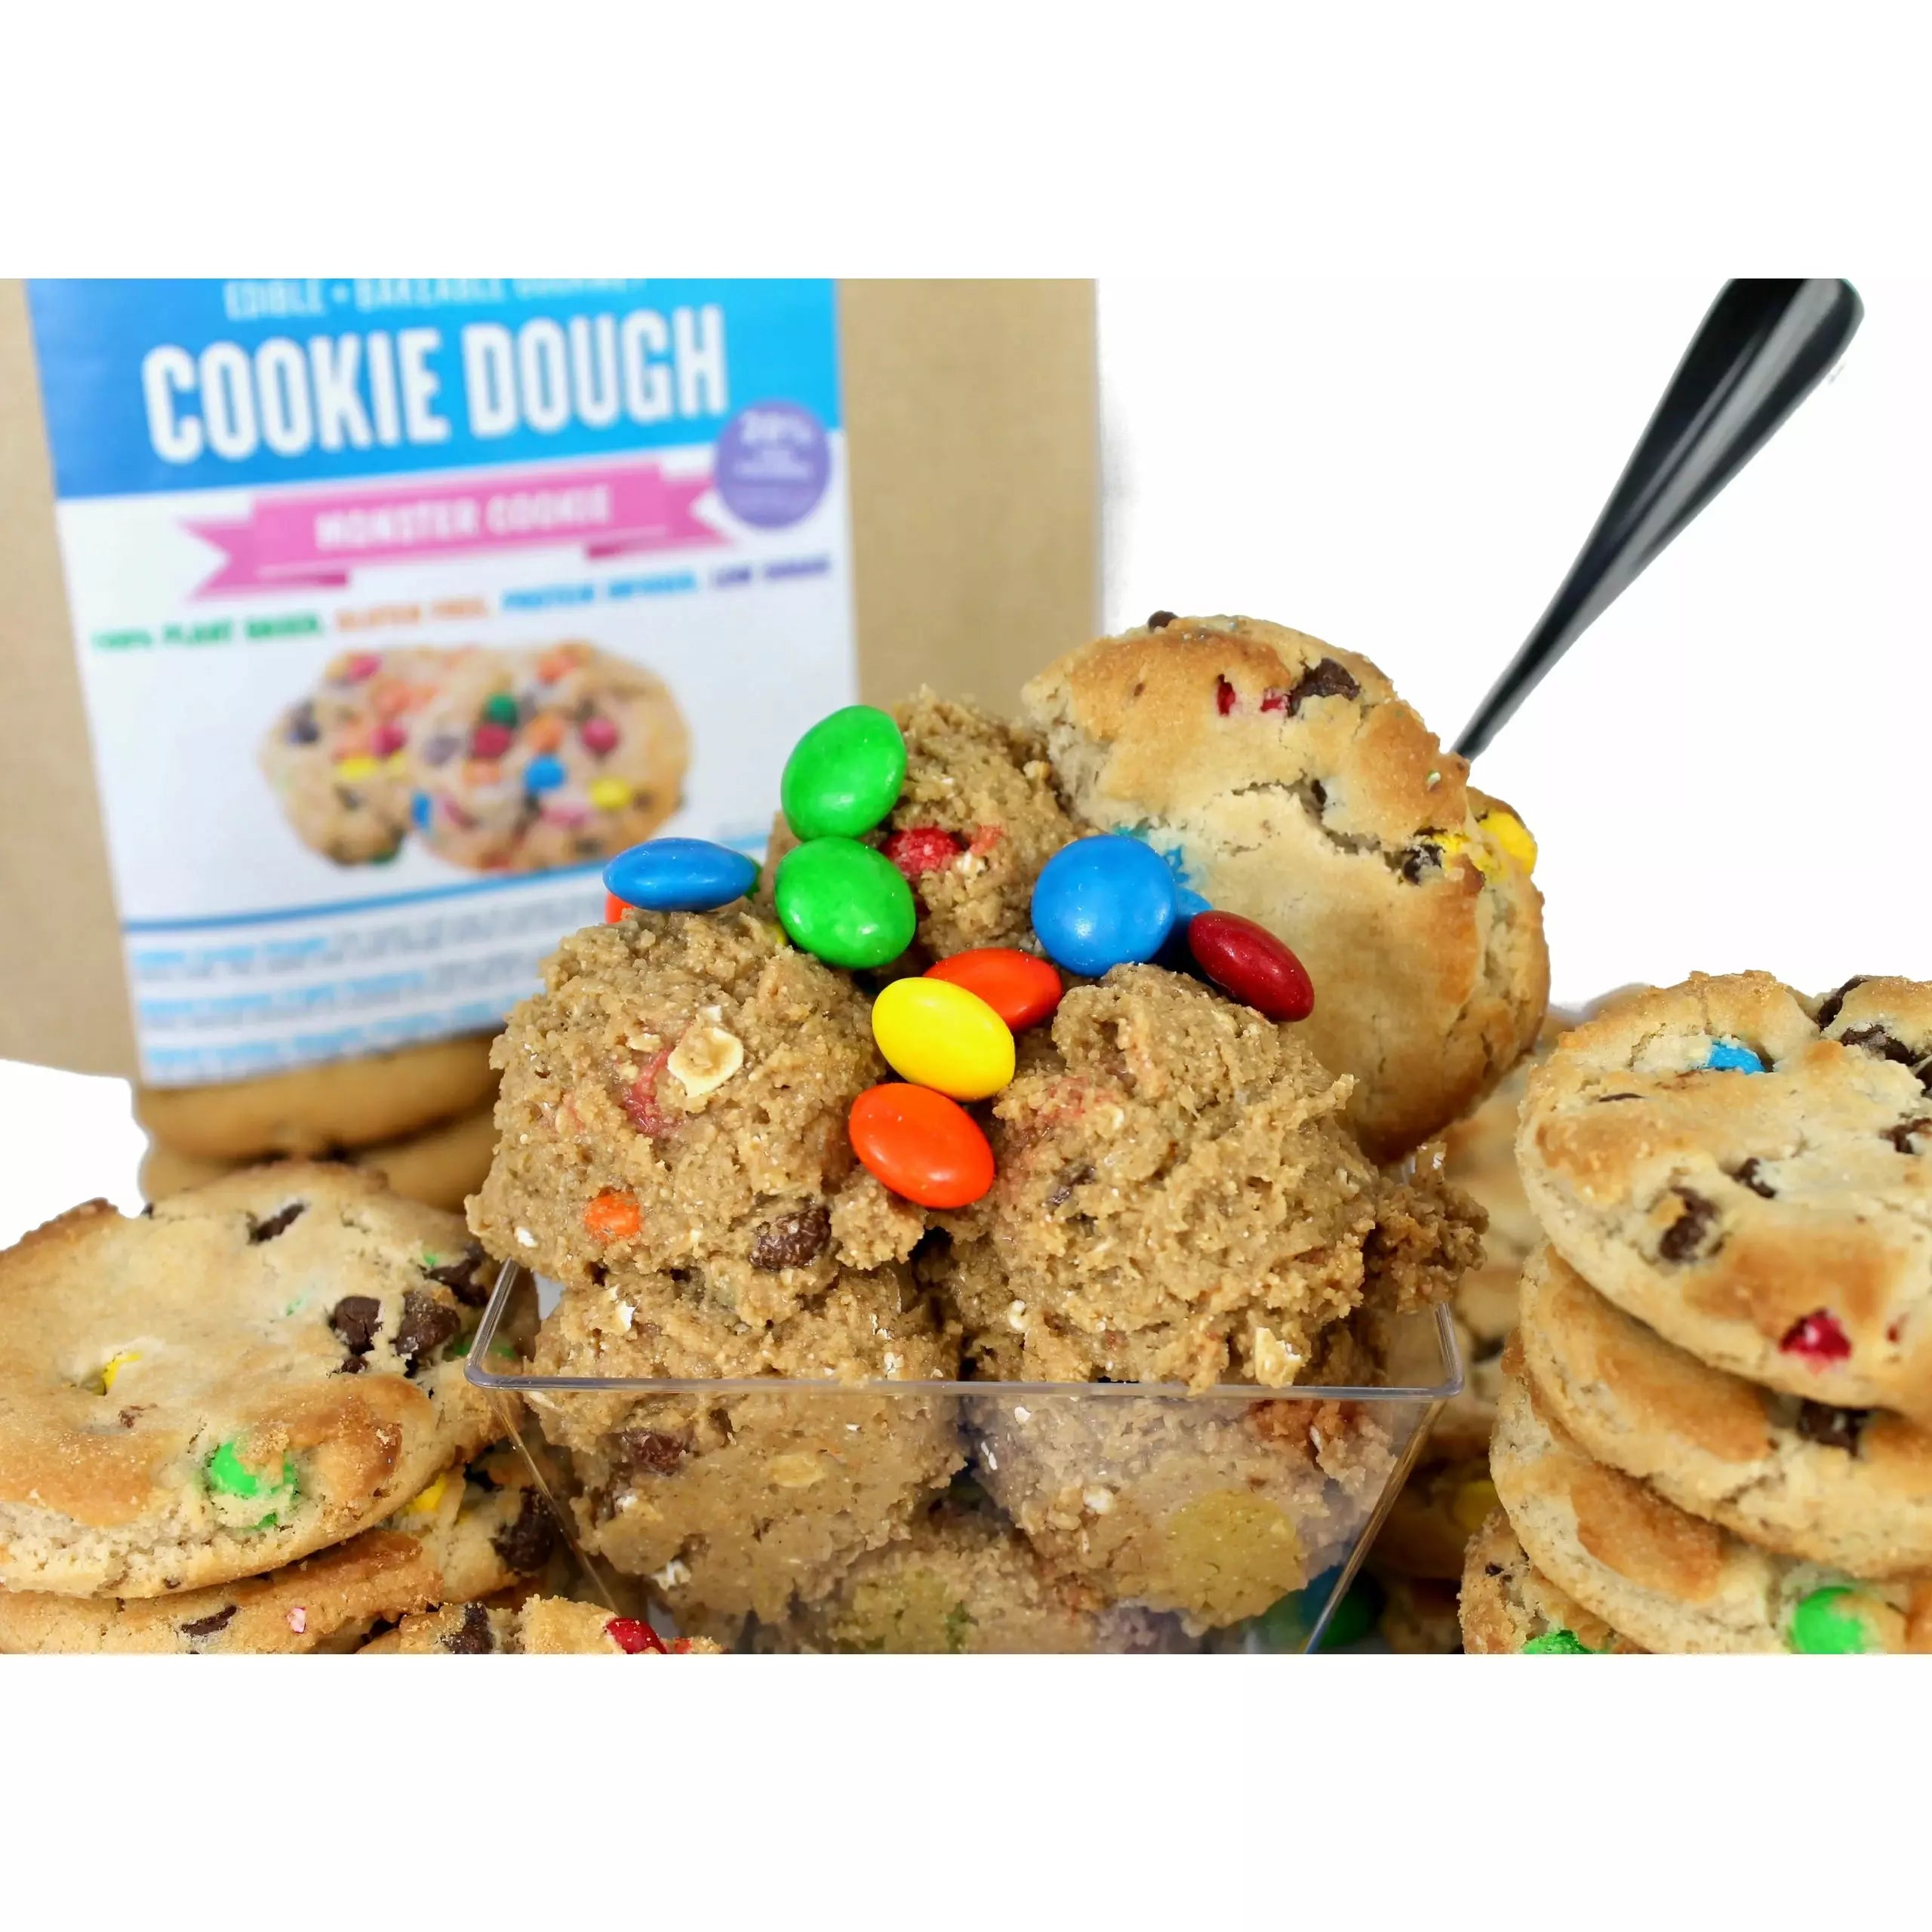 Kingline Nutrition VEGAN Protein Cookie Dough LITE DIY MIX (10 oz bag) kingline-nutrition-cookie-dough-lite-diy-mix-10-oz-bag Protein Snacks Monster Cookie Kingline Nutition